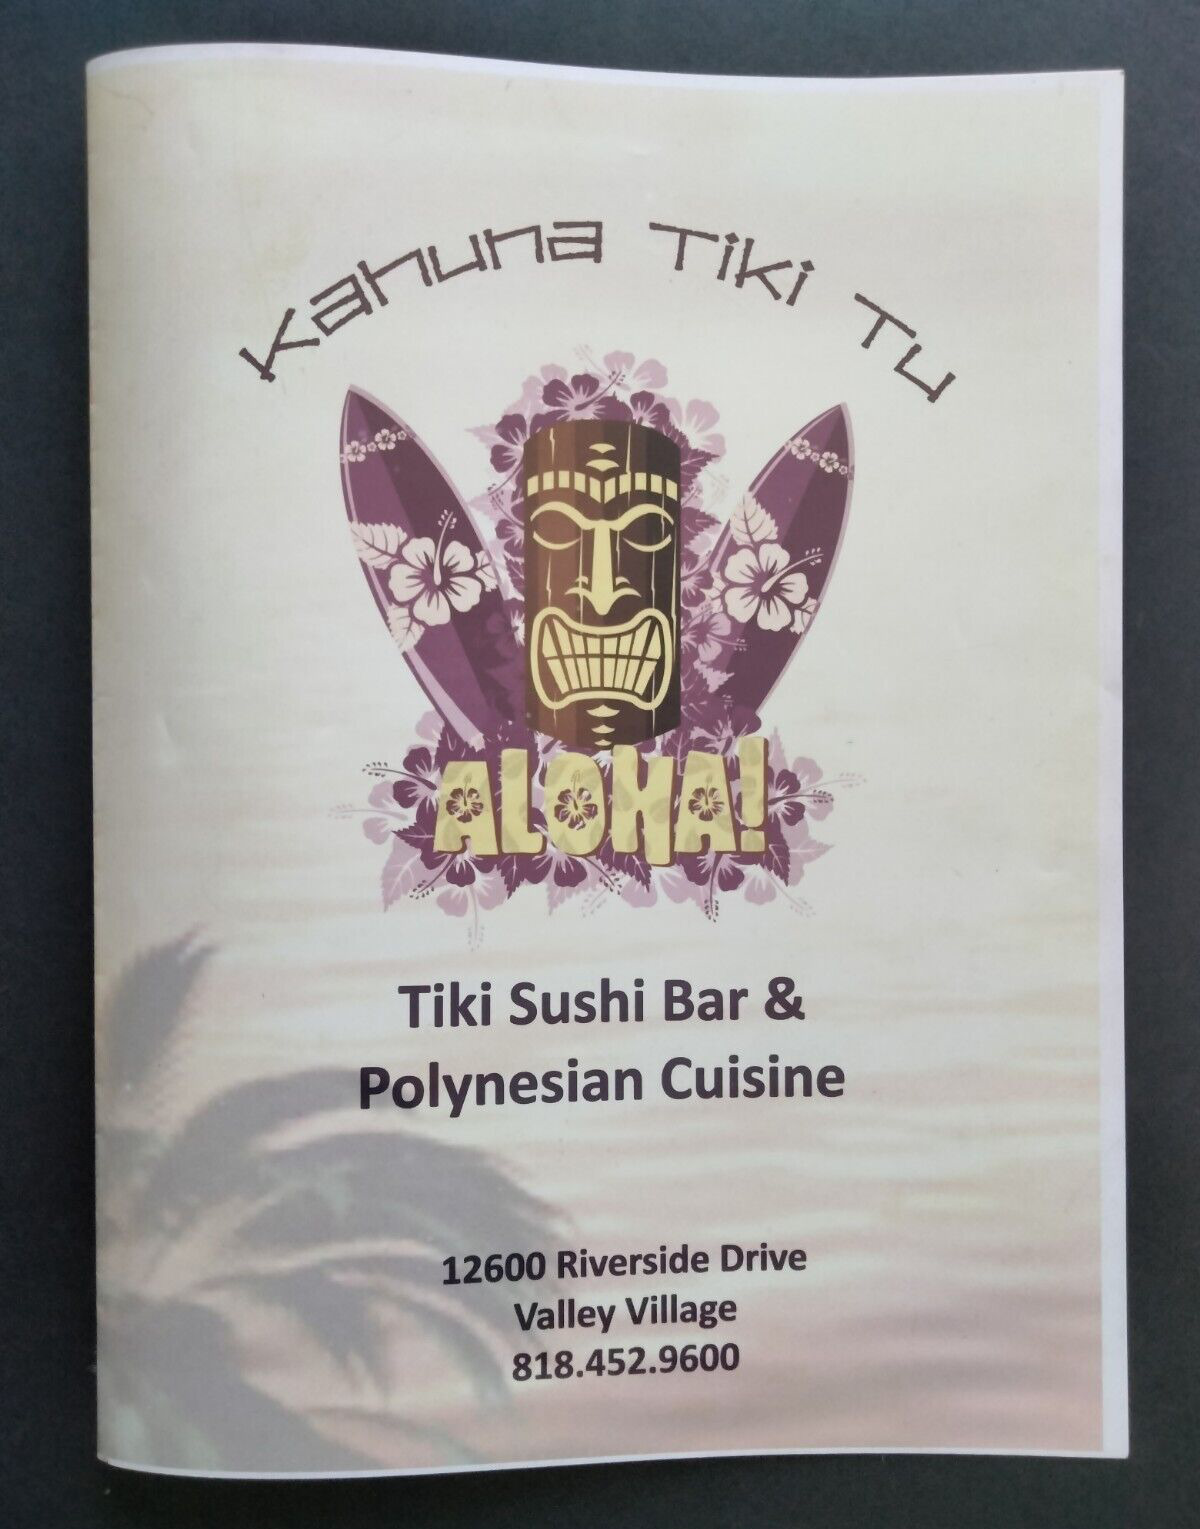 Kahuna Tiki Tu Tiki Sushi Bar & Polynesian Cuisine Menu - Pre-owned